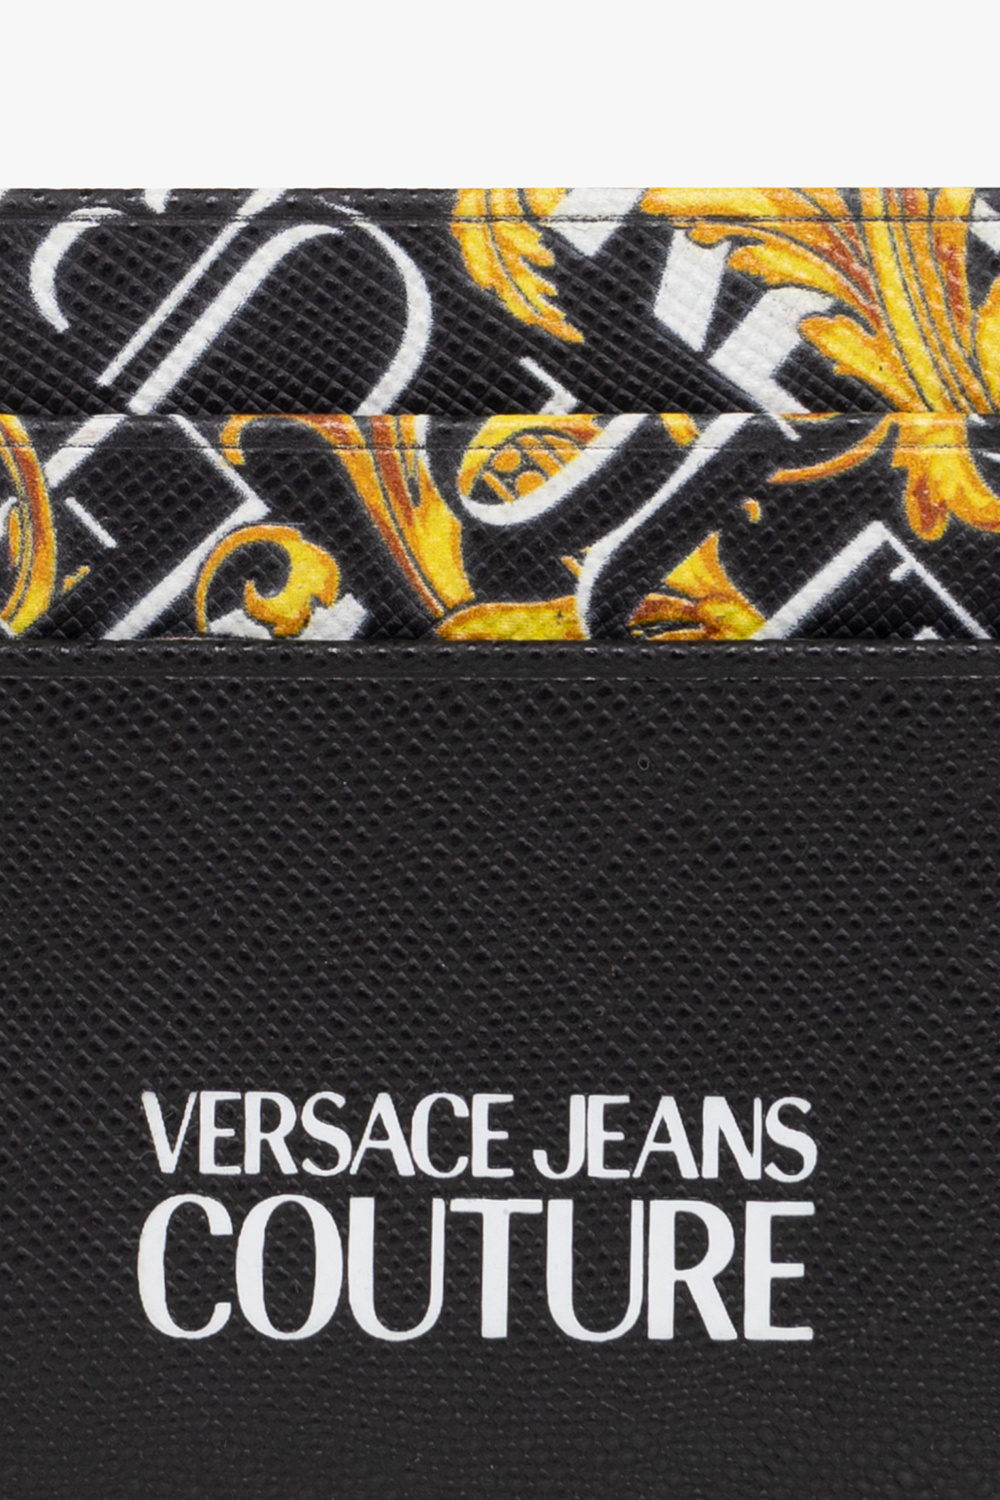 Versace Jeans Couture nap dress trend